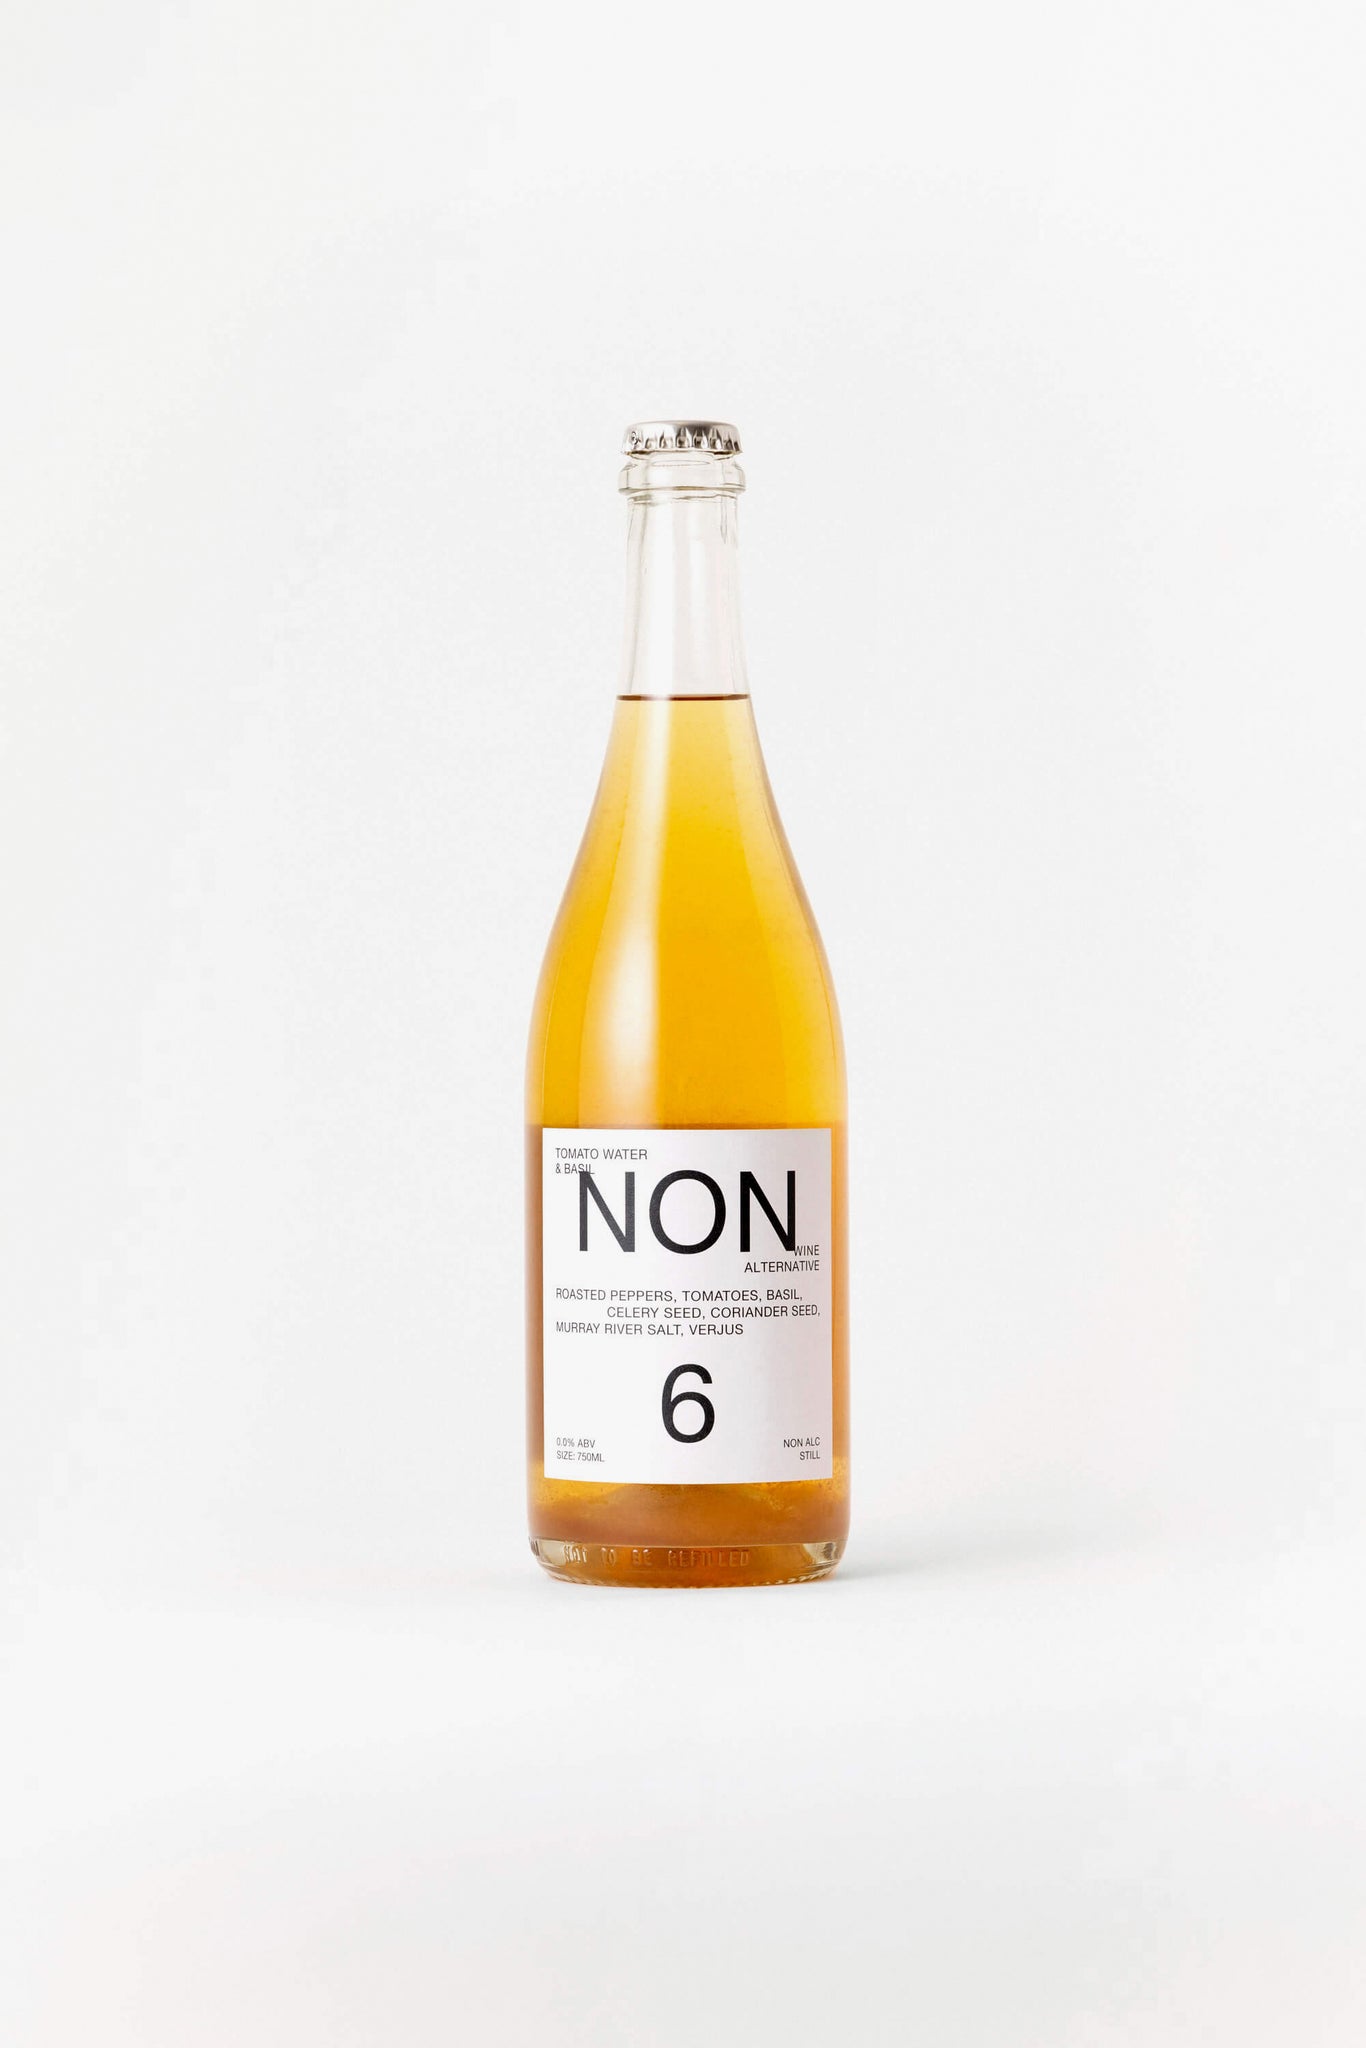 NON6 Tomato Water & Basil bottle front